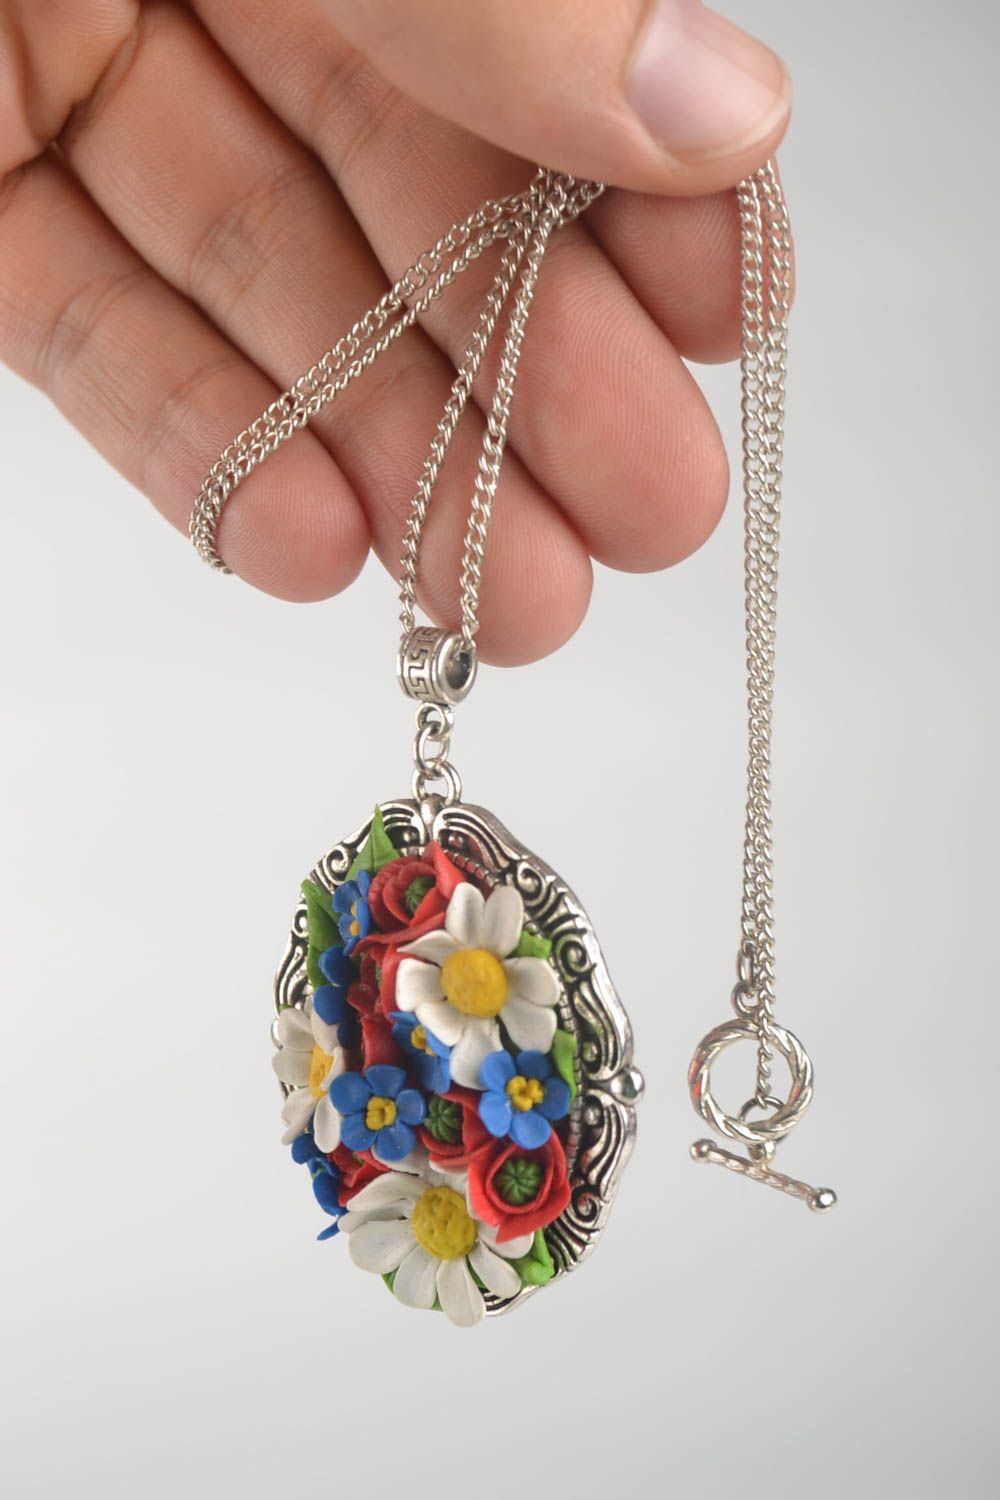 Handmade accessory unique cold porcelain necklace present ideas for girls photo 5